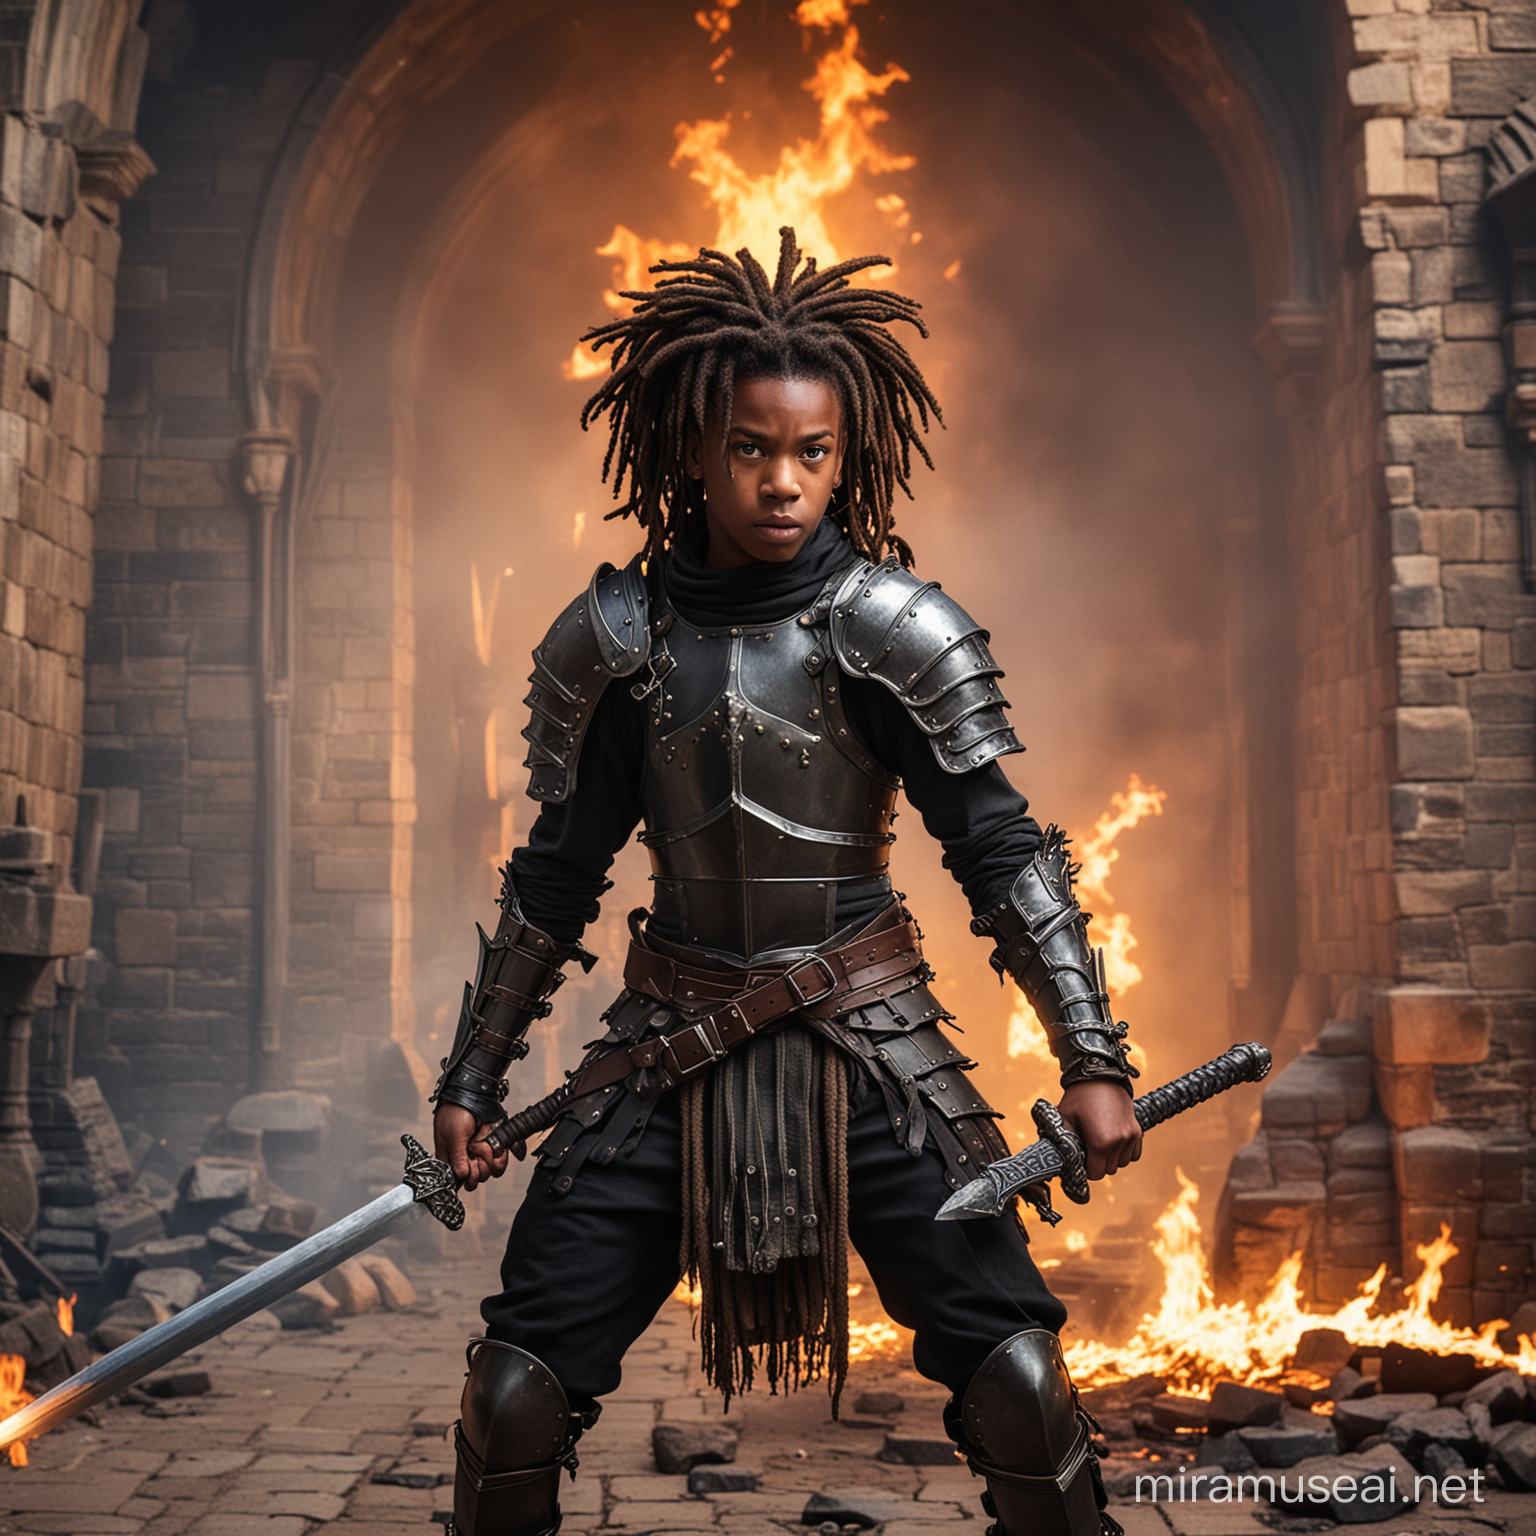 Young Black Teenage Boy Warrior with Dreadlocks Battling in Castle Amidst Fiery Inferno